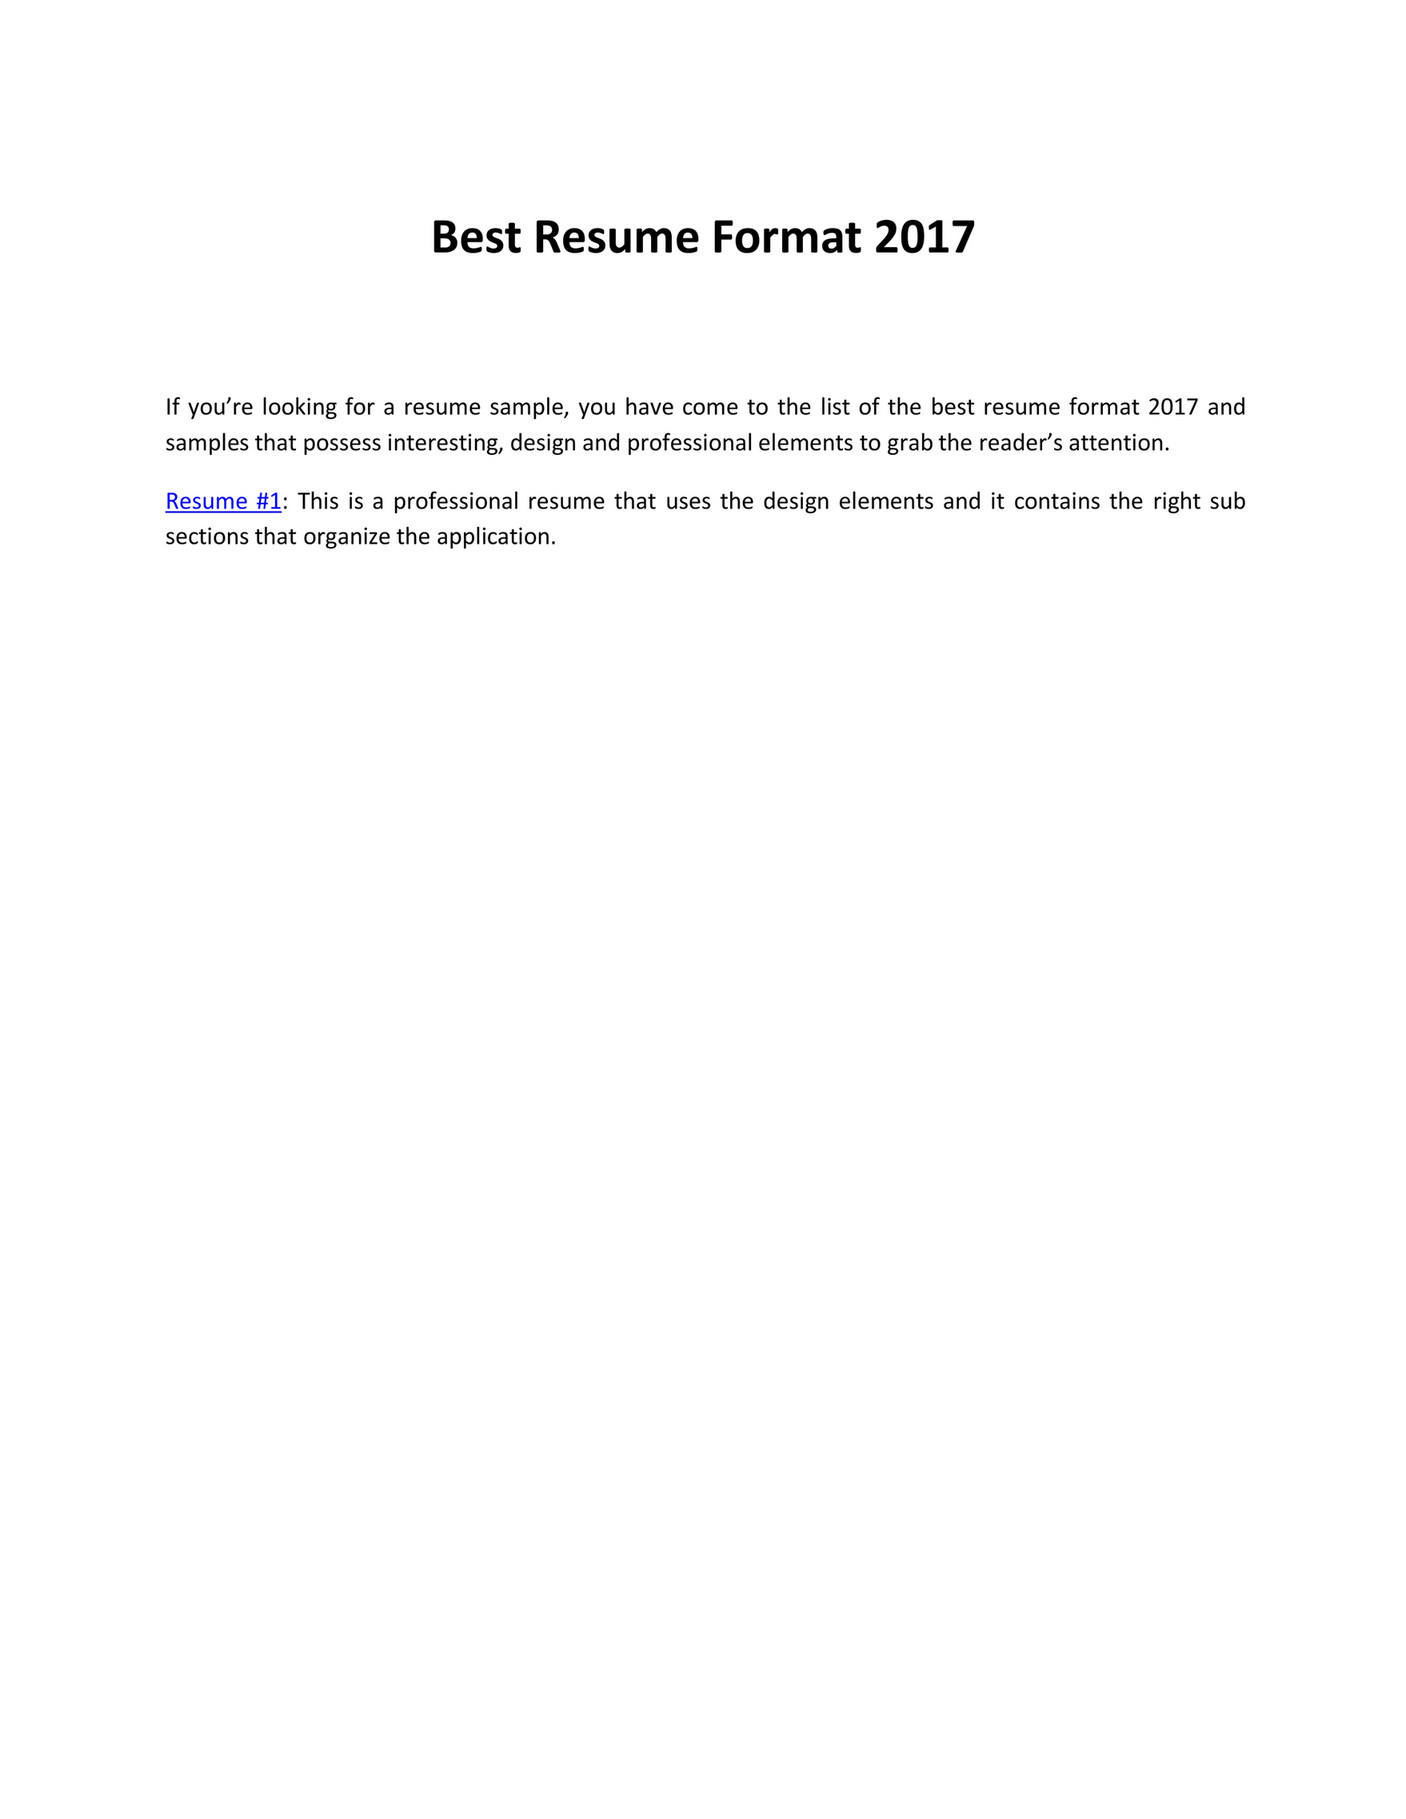 microsoft word resume template reddit